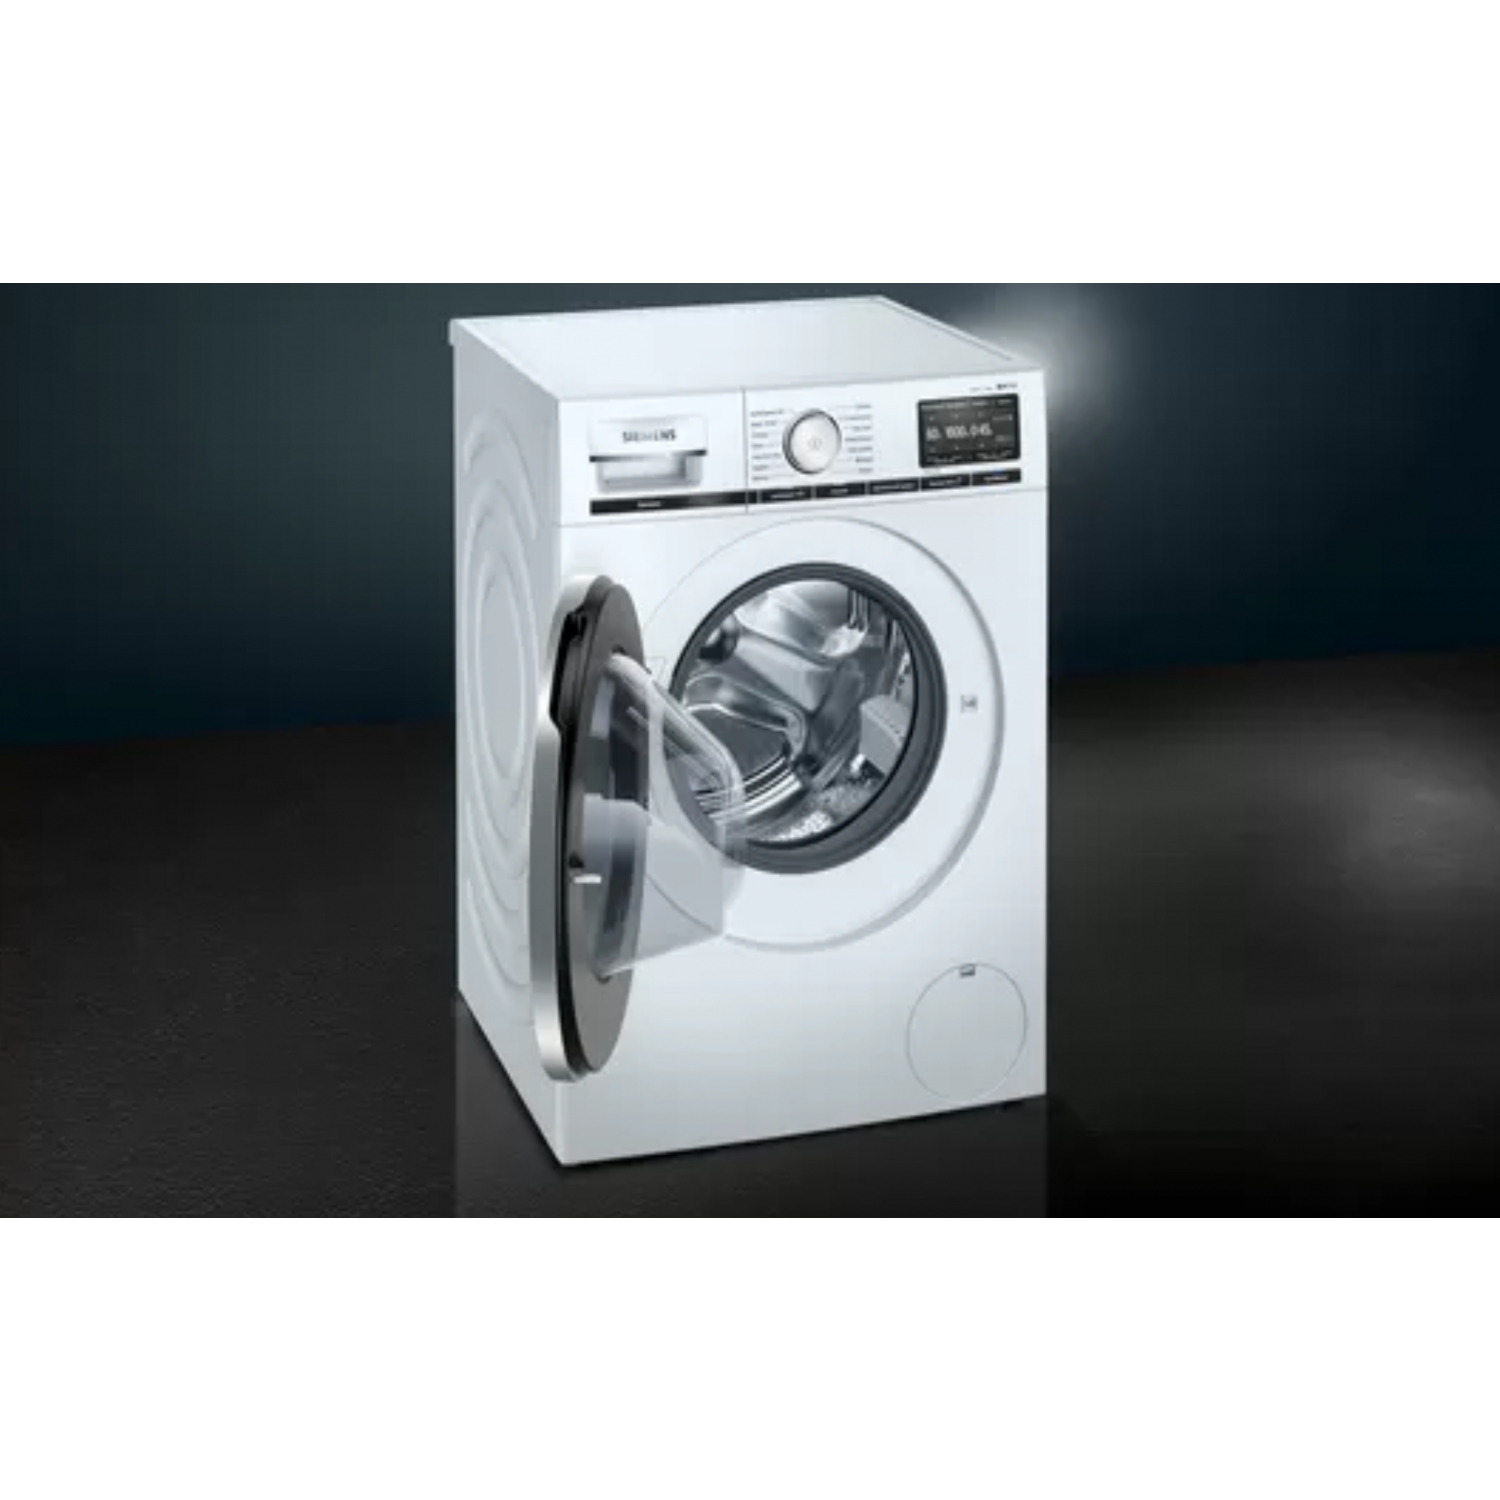 Siemens iQ700 Washing Machine, WiFi enabled. - 0